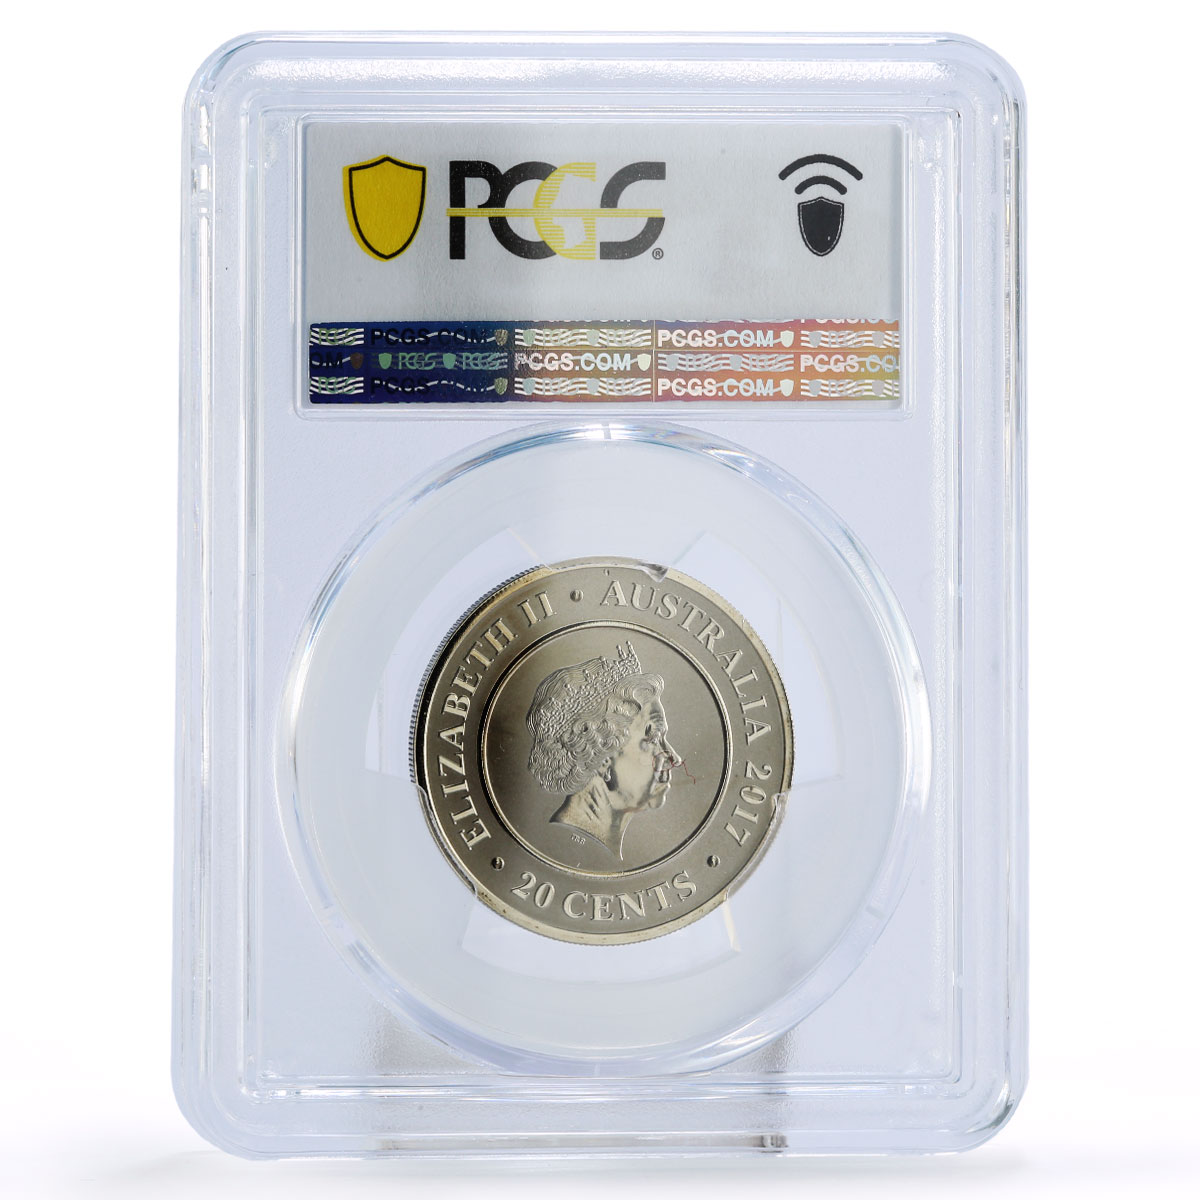 Australia 20 cents Planetary Coin Uranus Space MS68 PCGS CuNi coin 2017